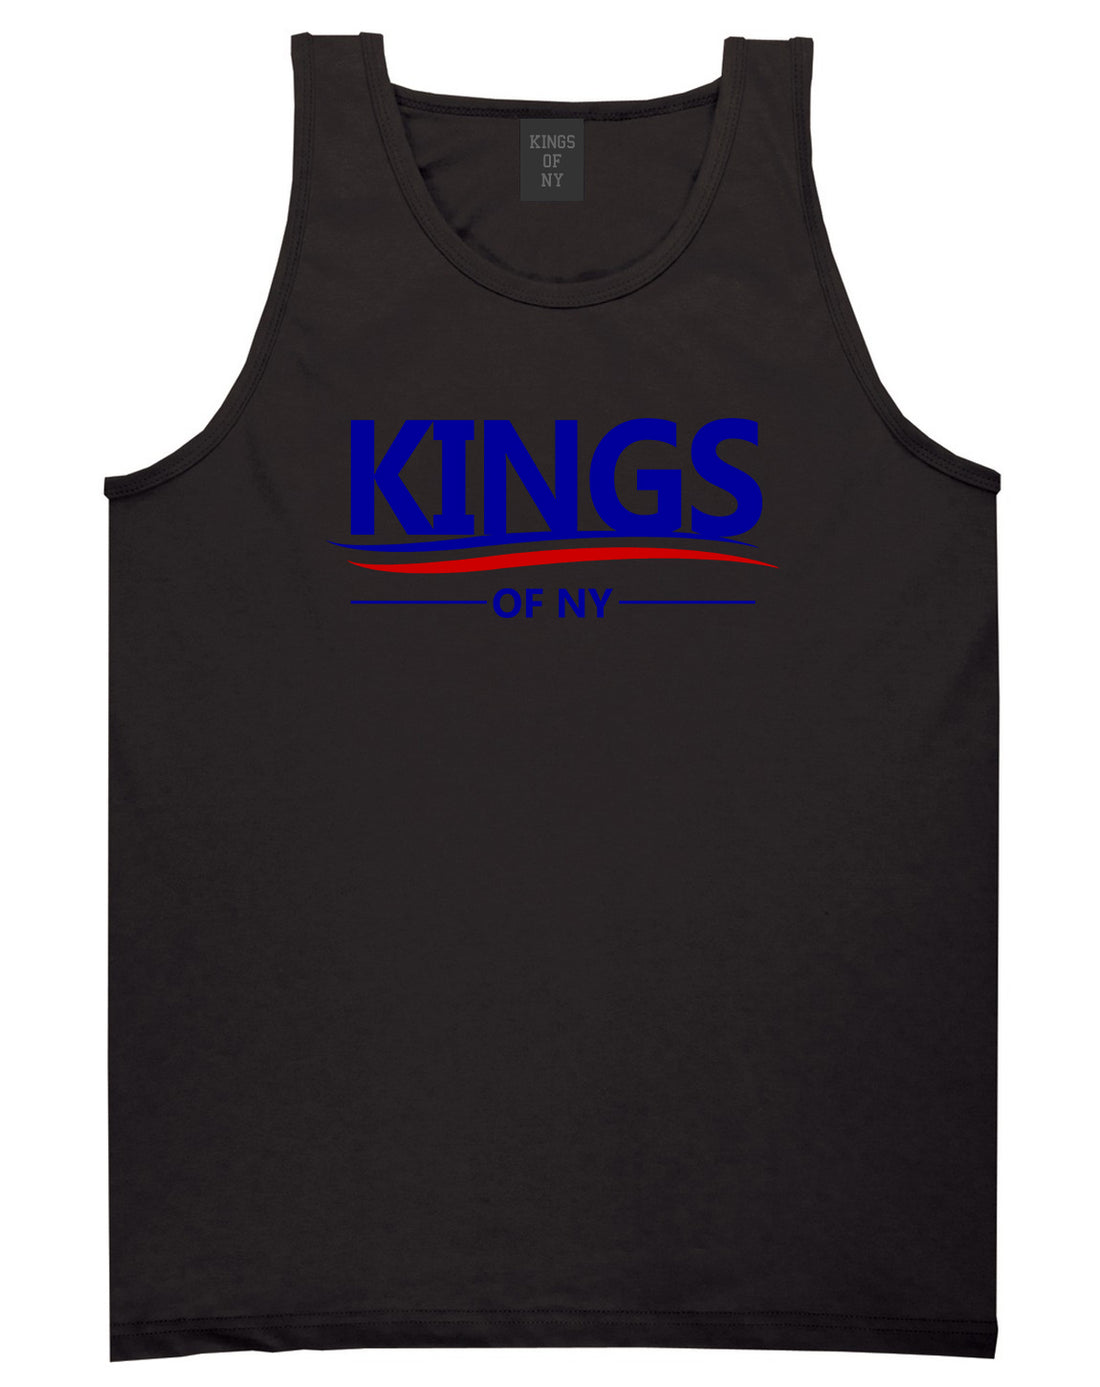 Kings Of NY Campaign Logo Tank Top Shirt in Black